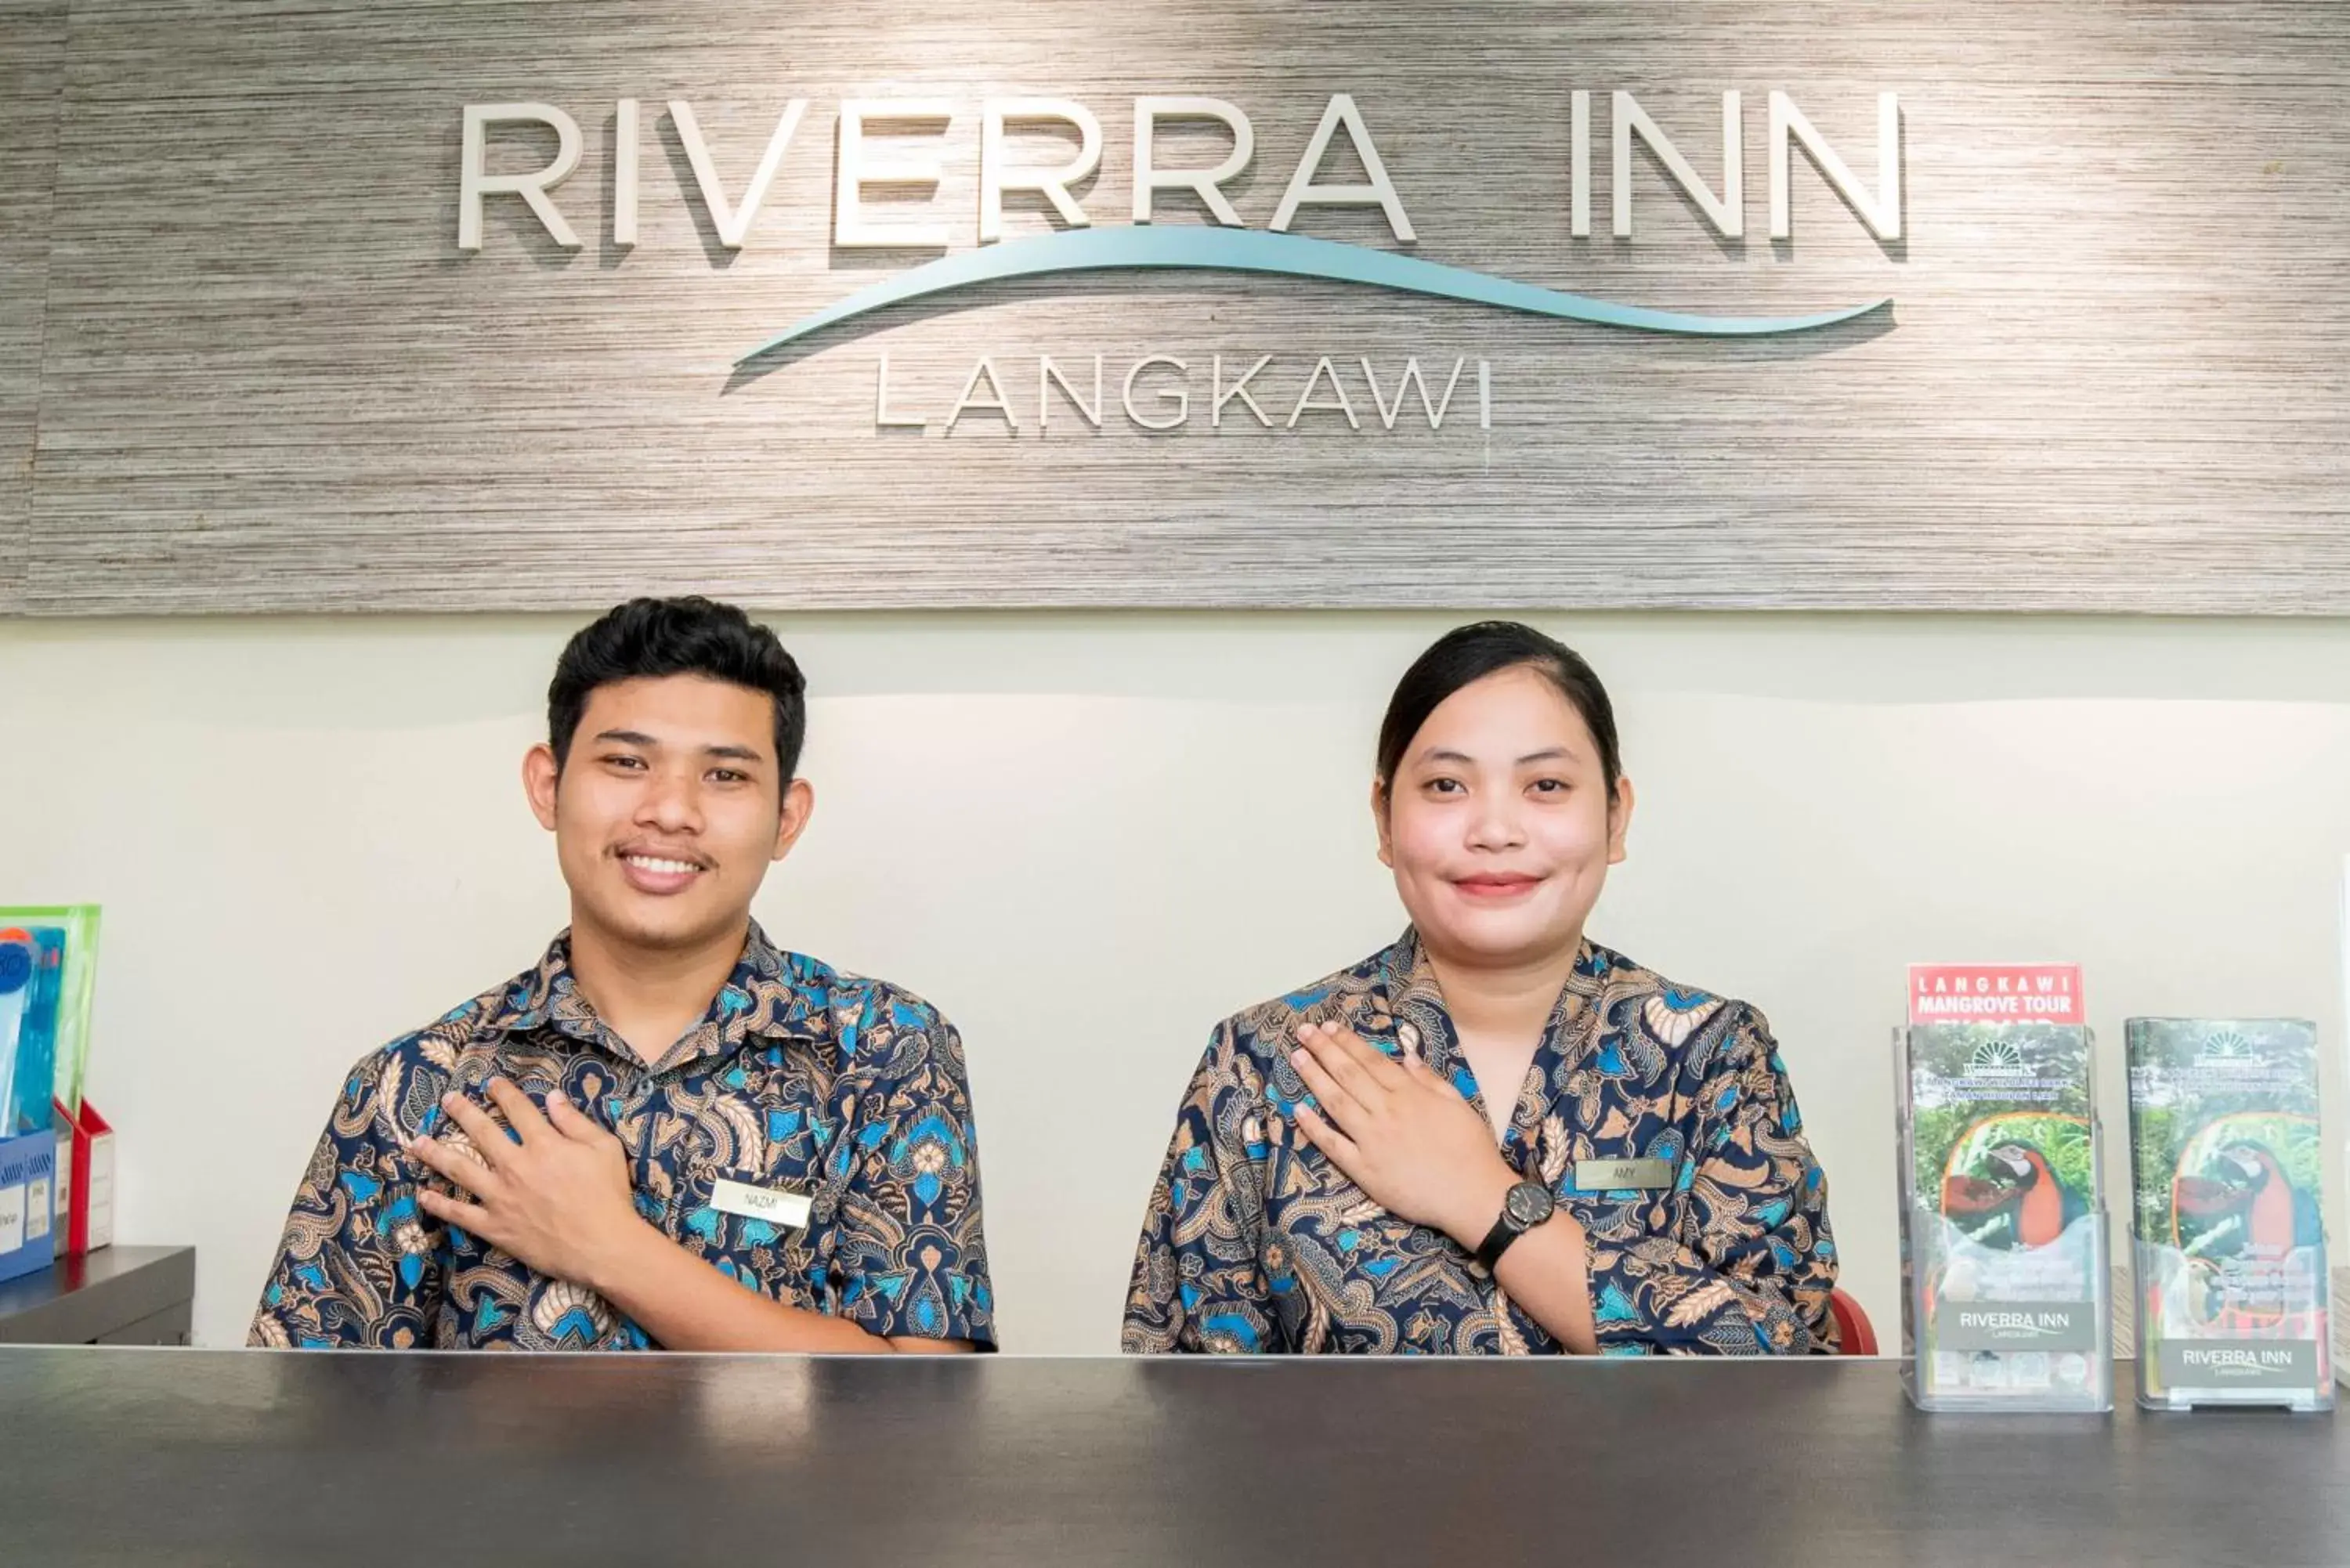 Staff, Lobby/Reception in Riverra Inn Langkawi